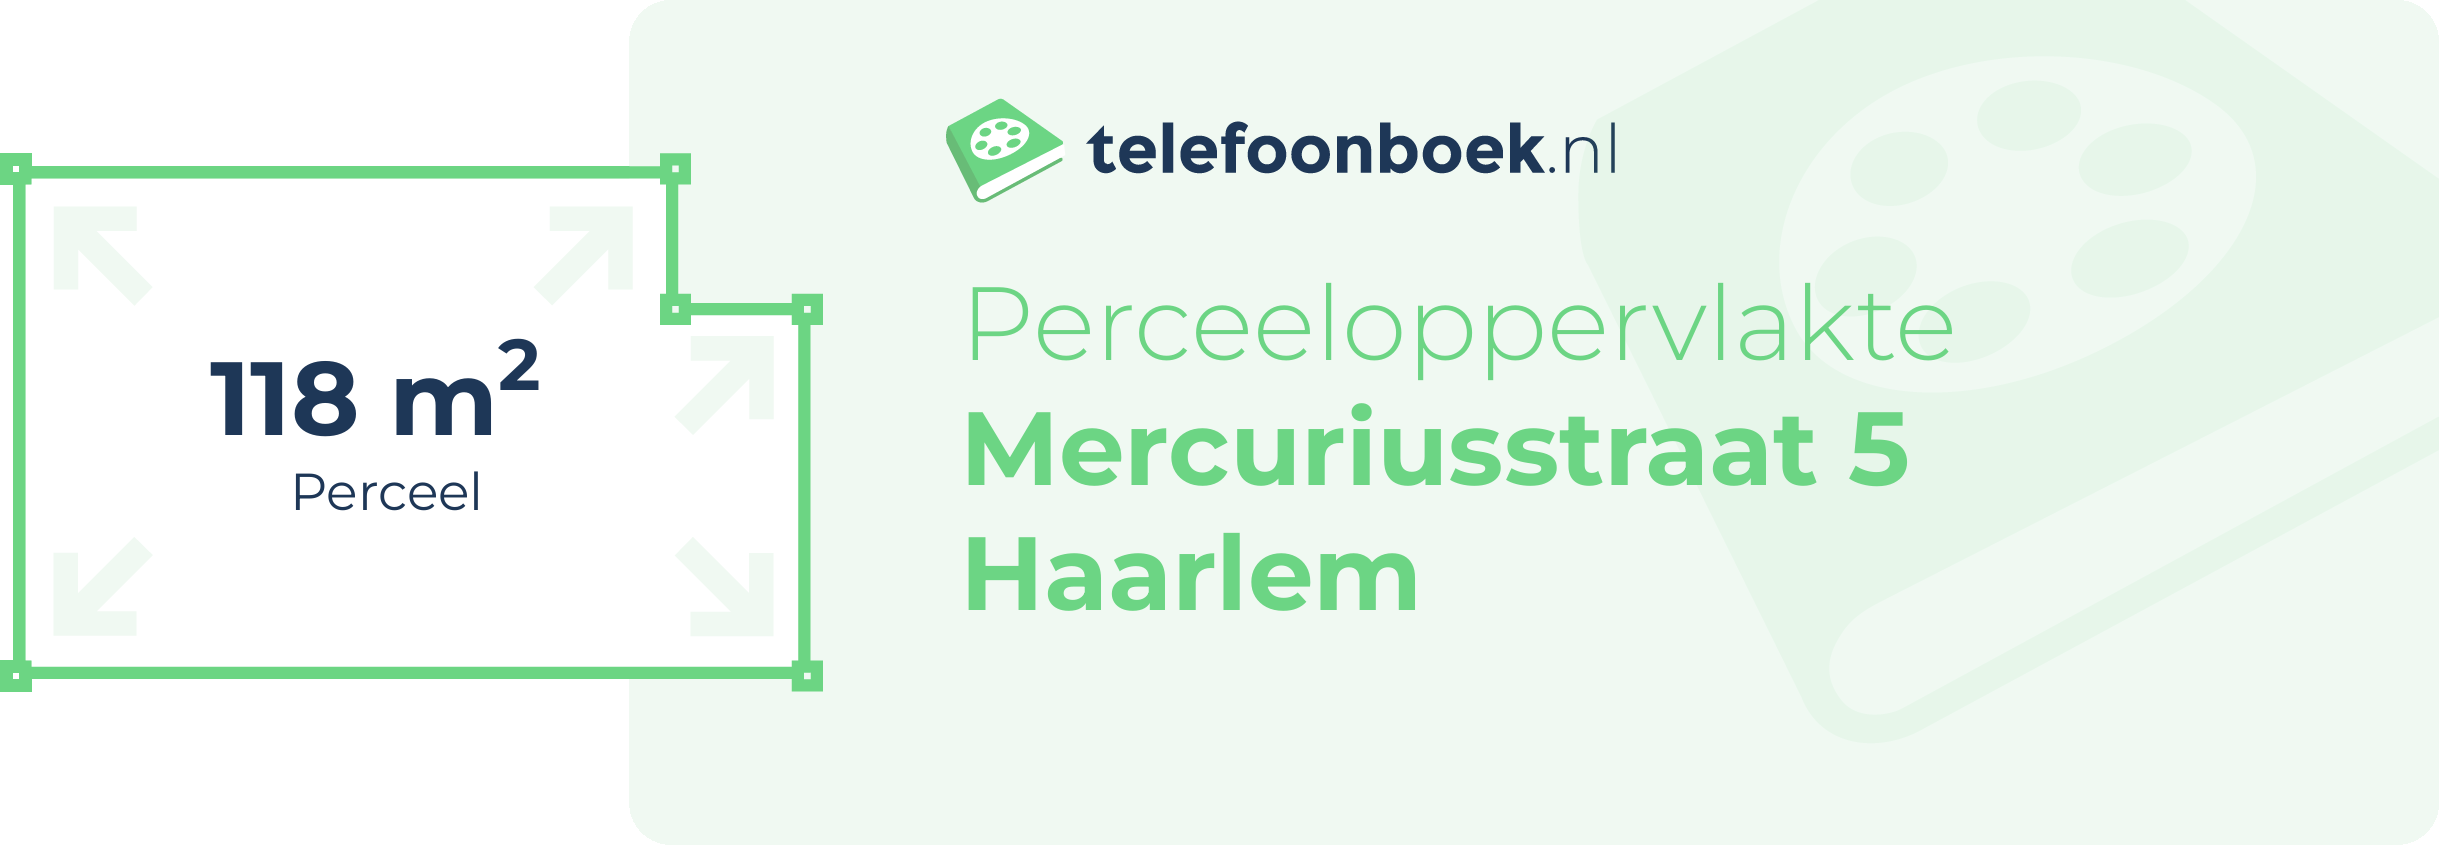 Perceeloppervlakte Mercuriusstraat 5 Haarlem